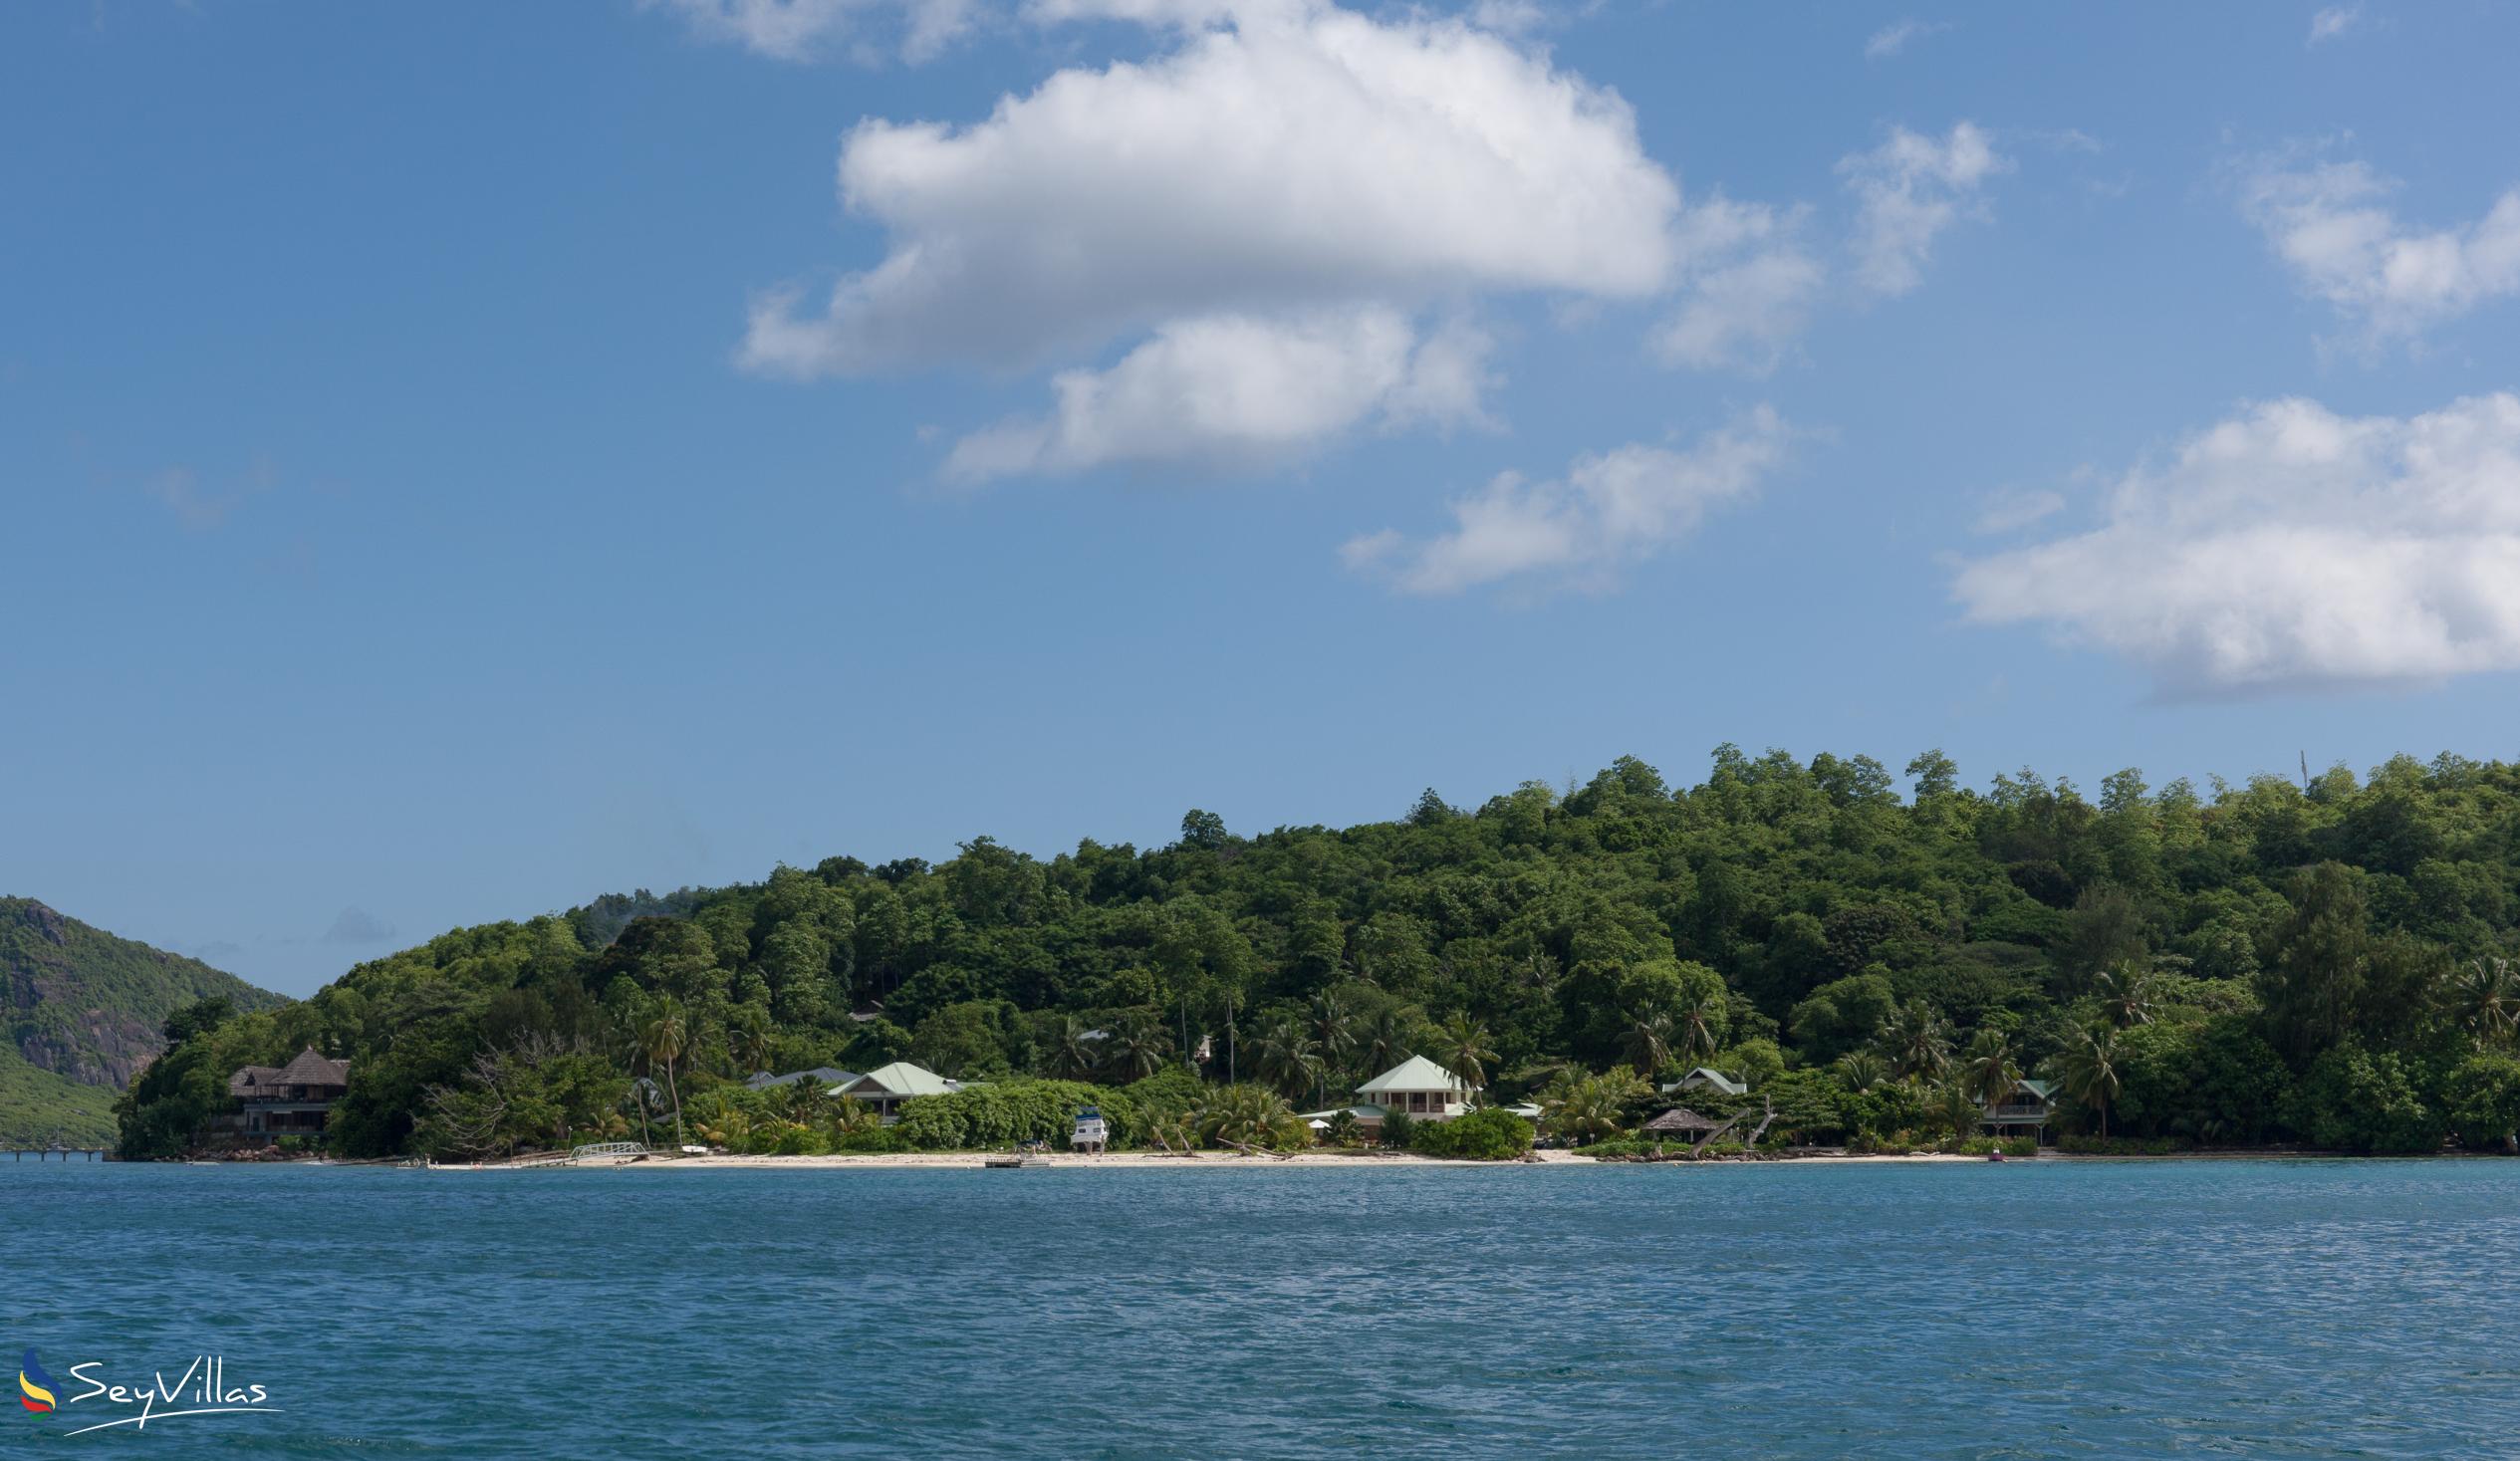 Photo 15: Villa de Cerf - Location - Cerf Island (Seychelles)